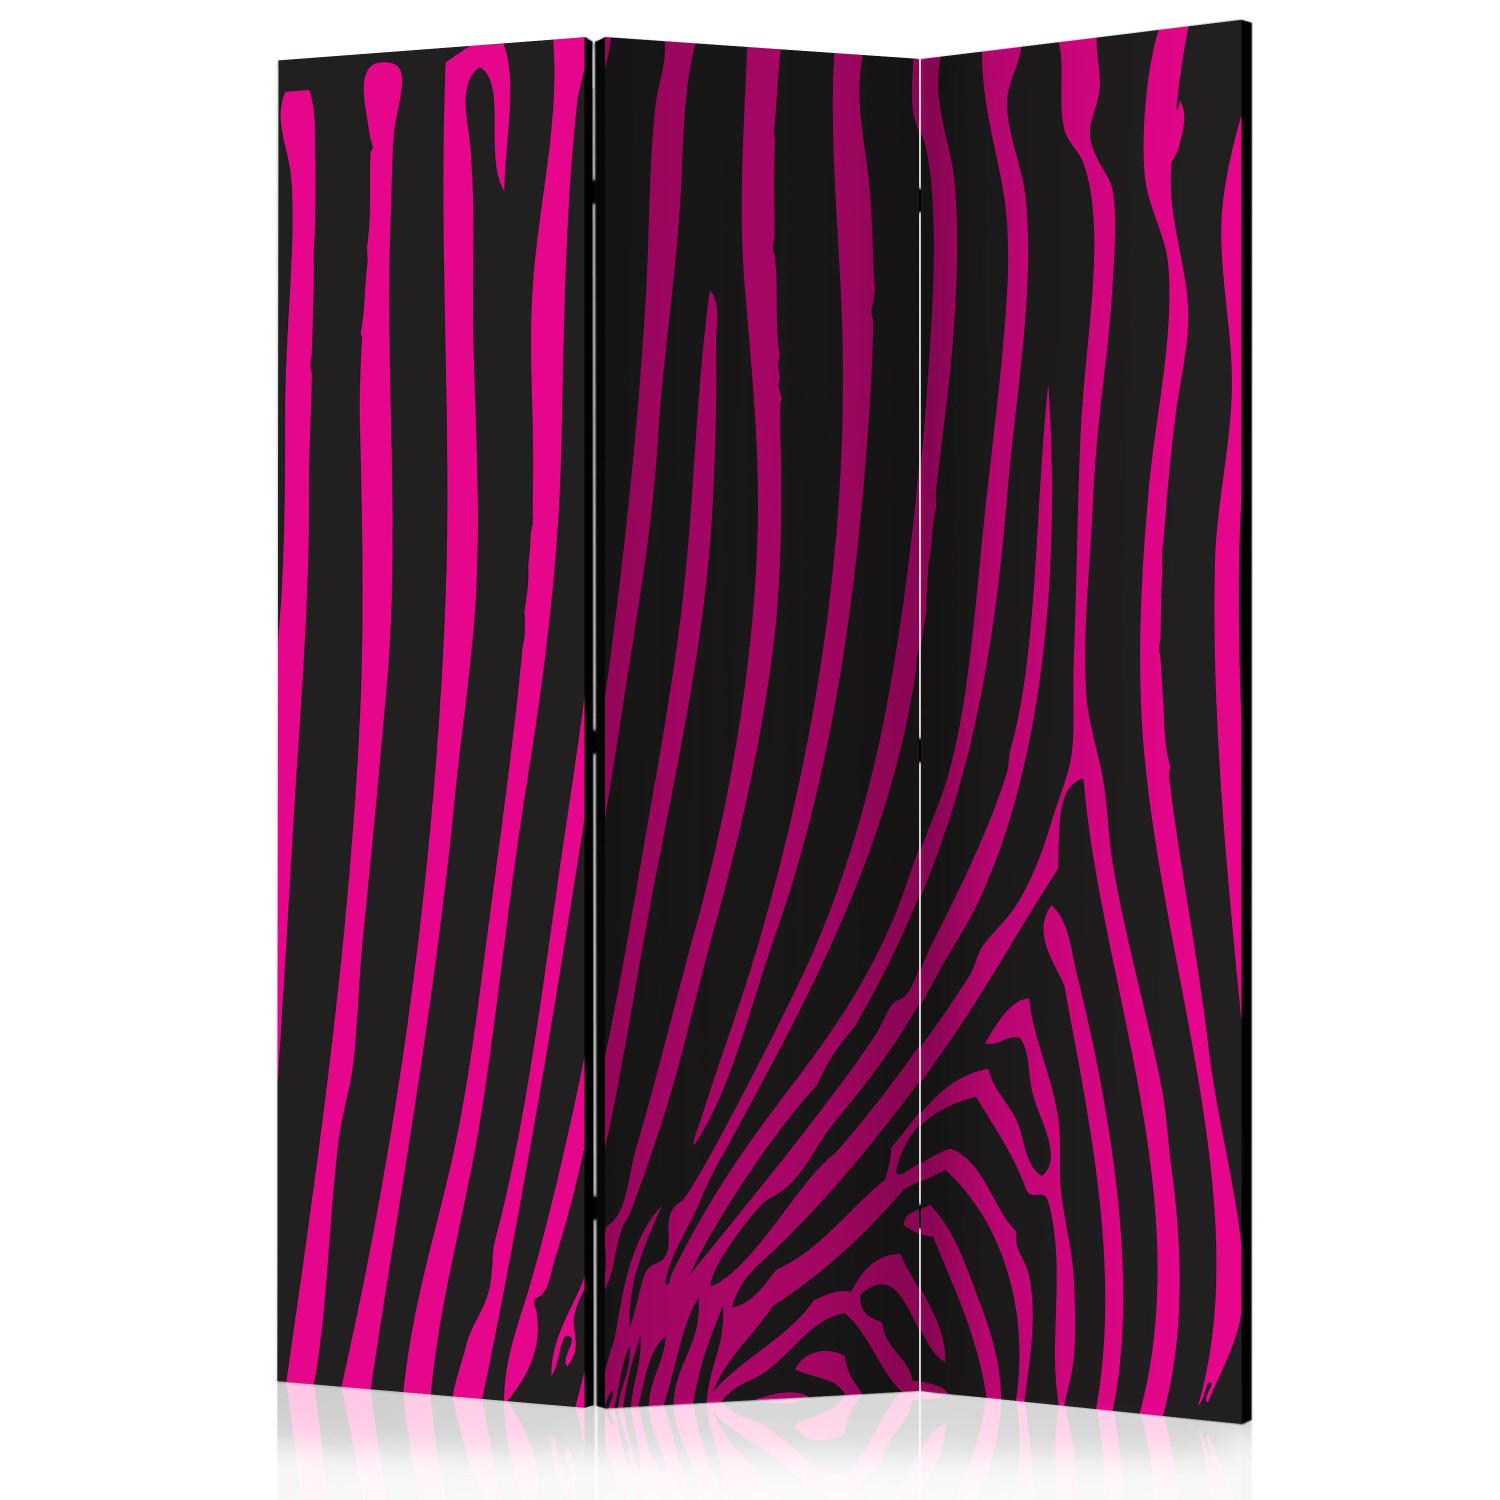 Biombo decorativo Zebra pattern (violet) [Room Dividers]